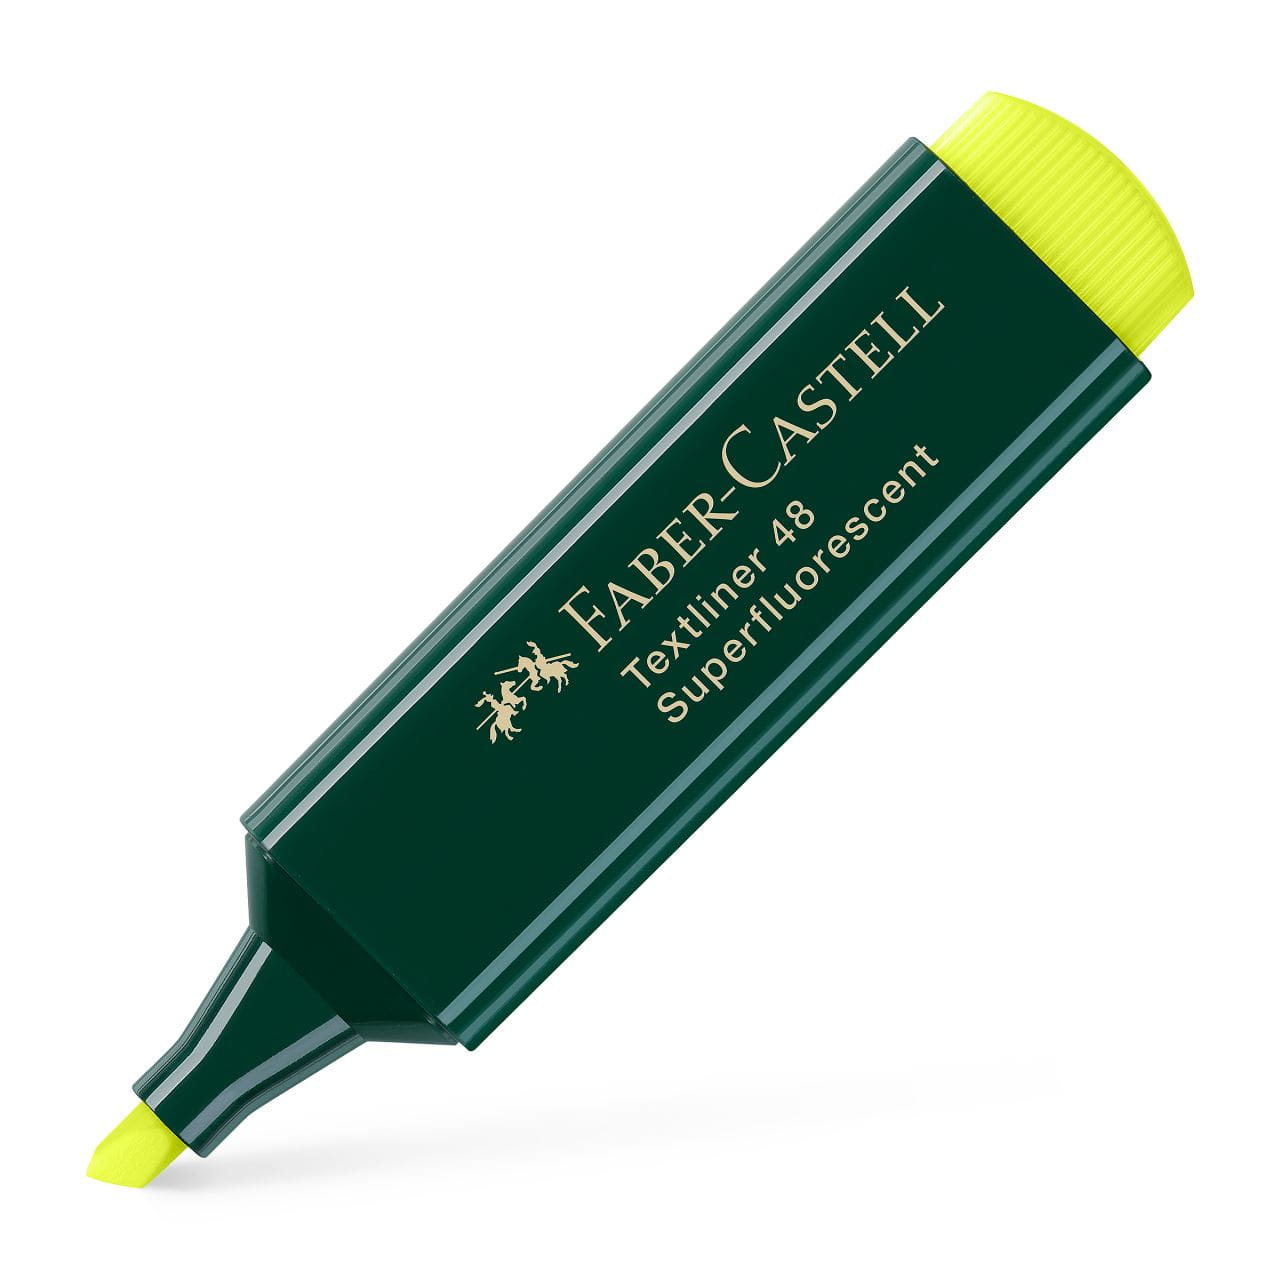 Faber-Castell - Marcador Textliner 48 superfluorescente, amarillo